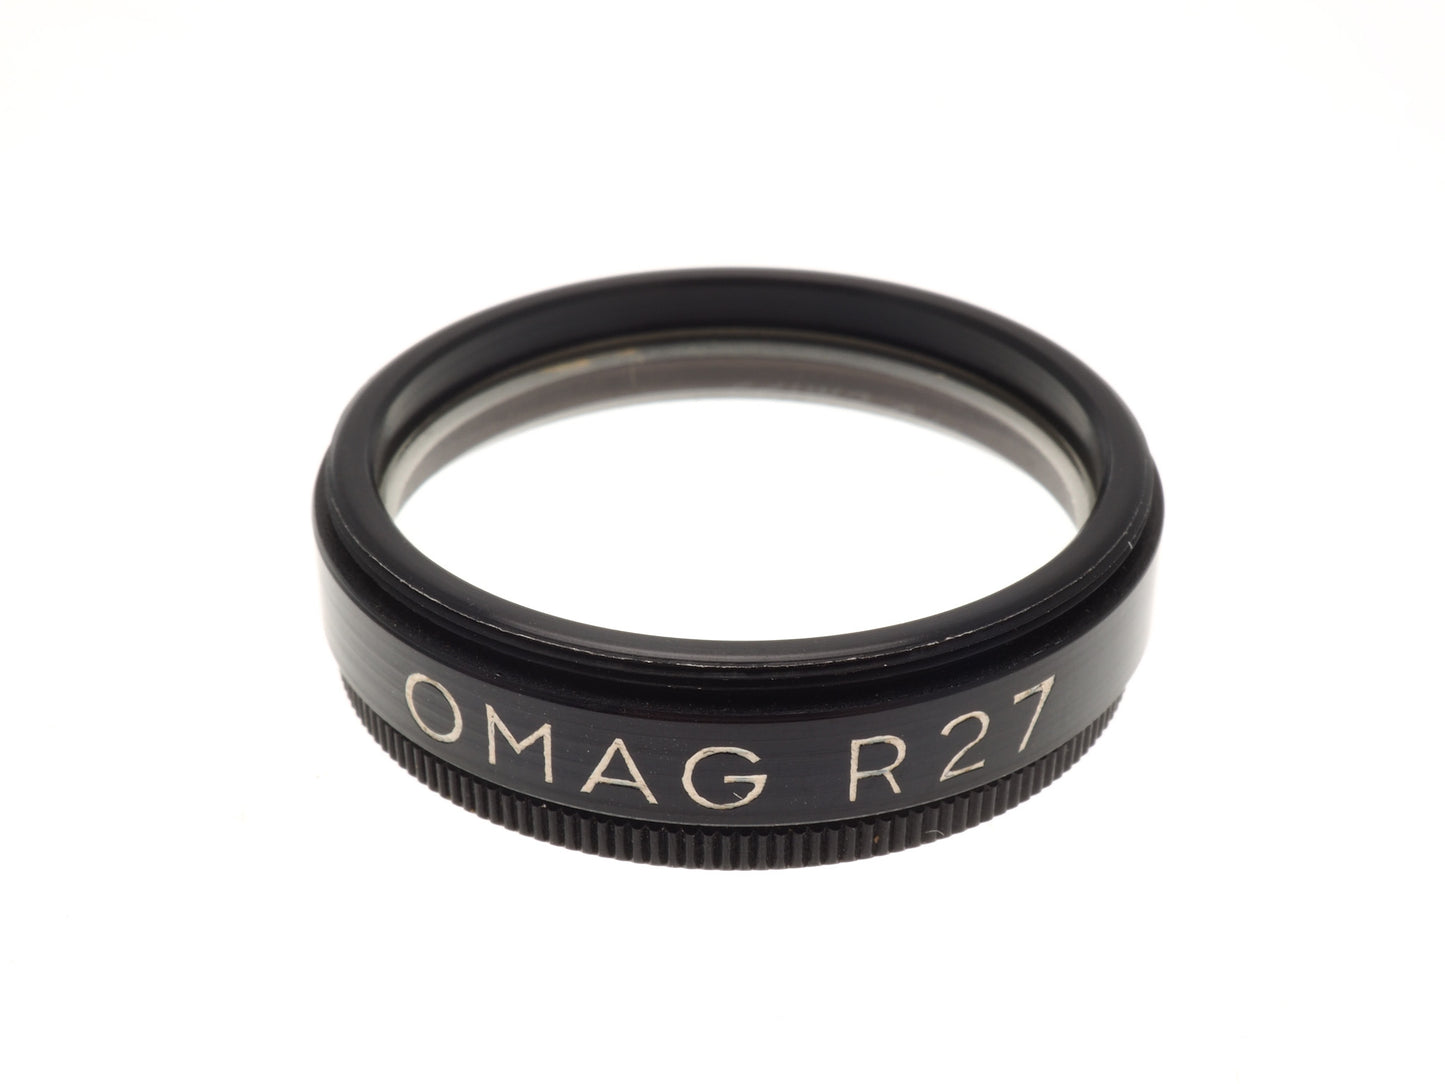 Omag R27 Close-Up Lens